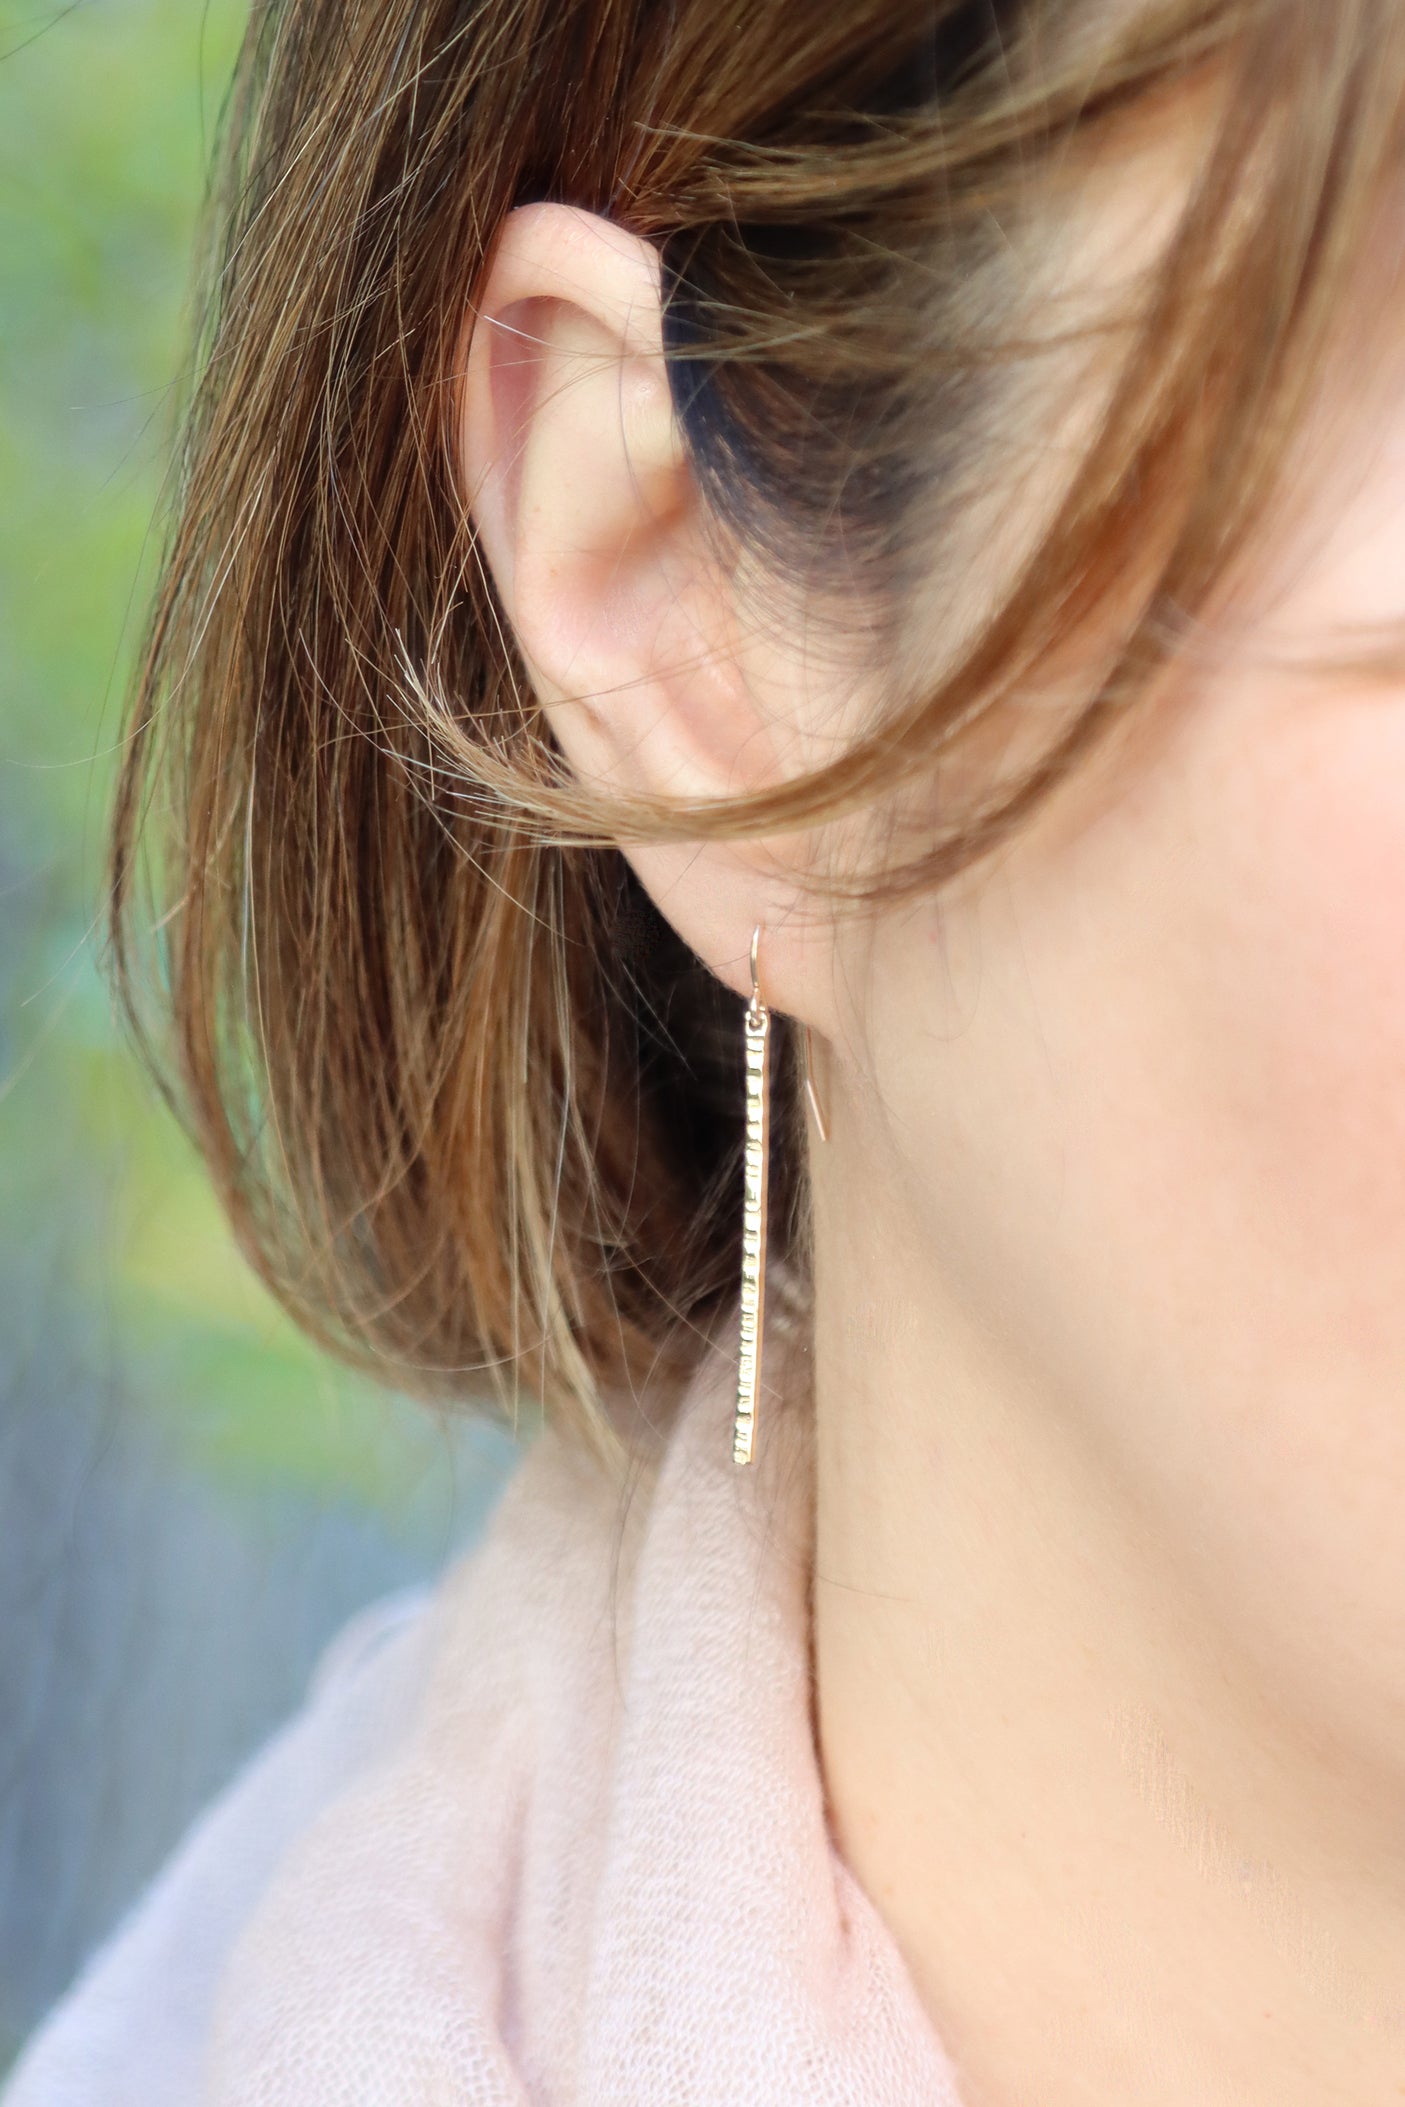 Gestalt Earrings